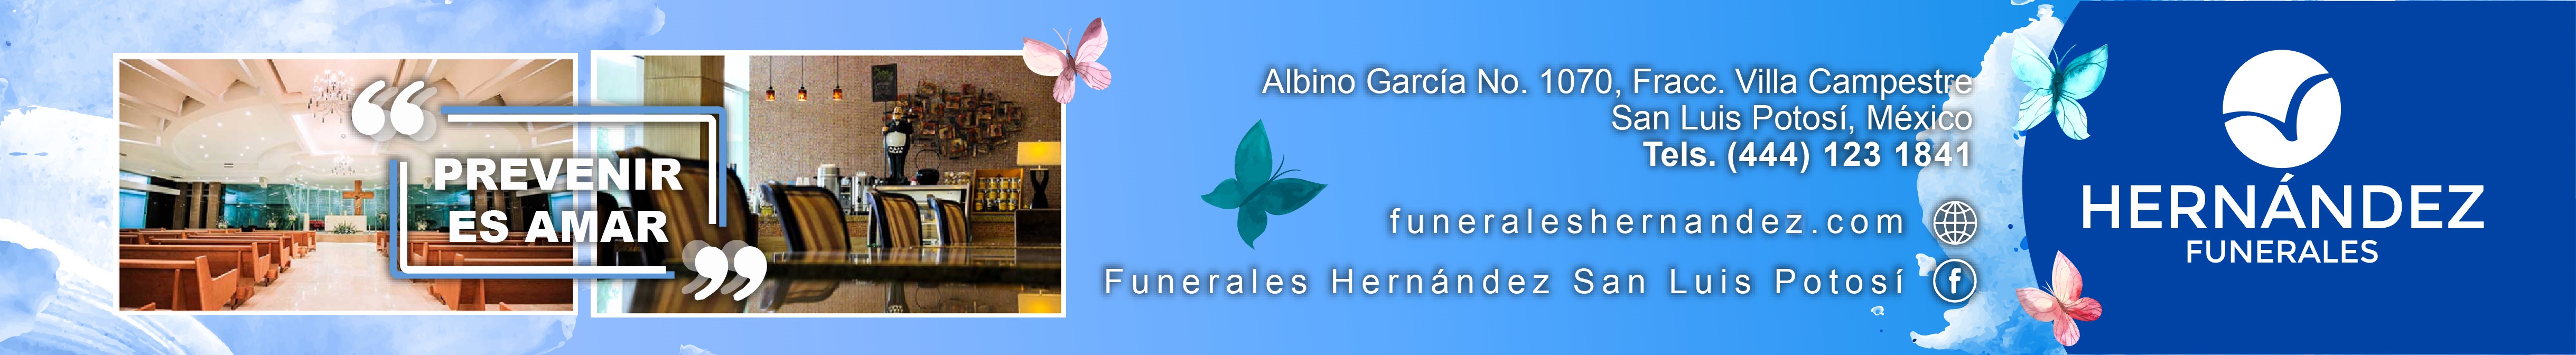 FuneralesHernandez